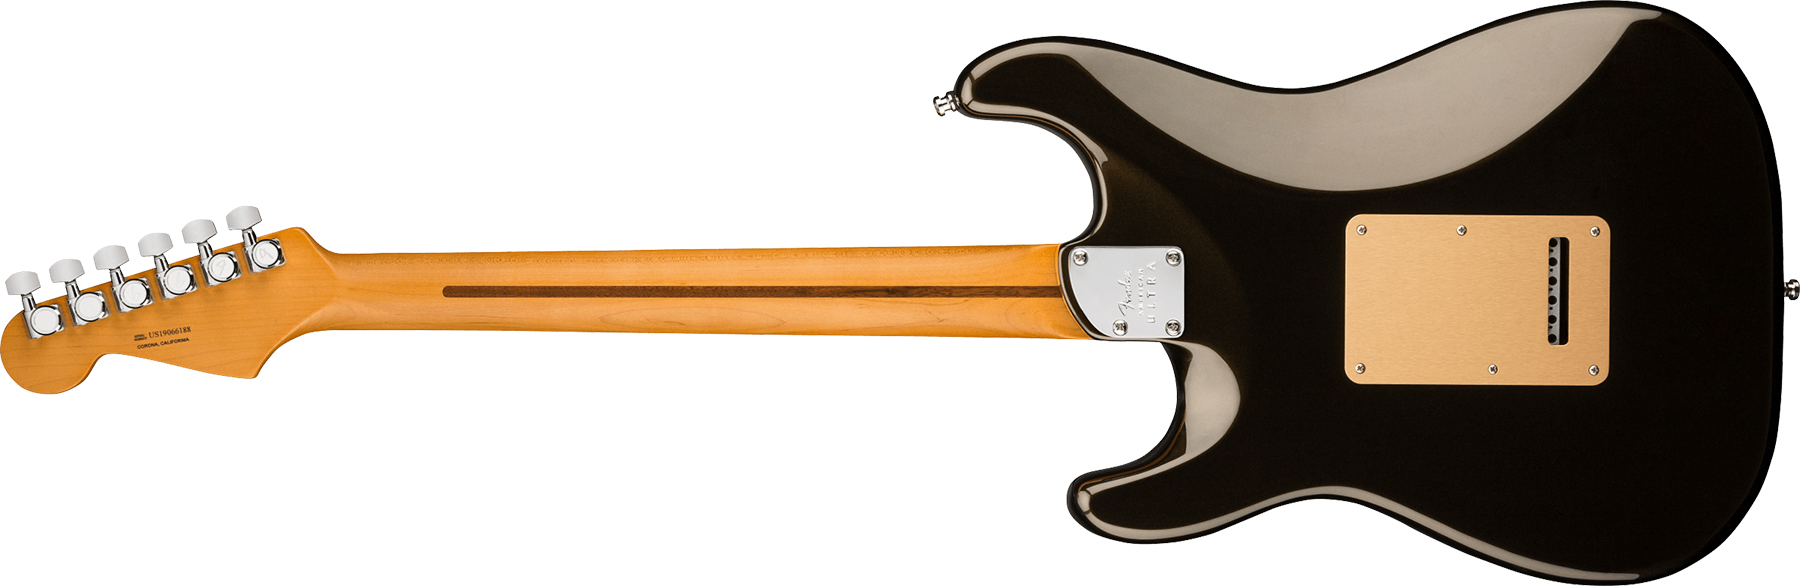 Fender Strat American Ultra 2019 Usa Mn - Texas Tea - Guitarra eléctrica con forma de str. - Variation 1